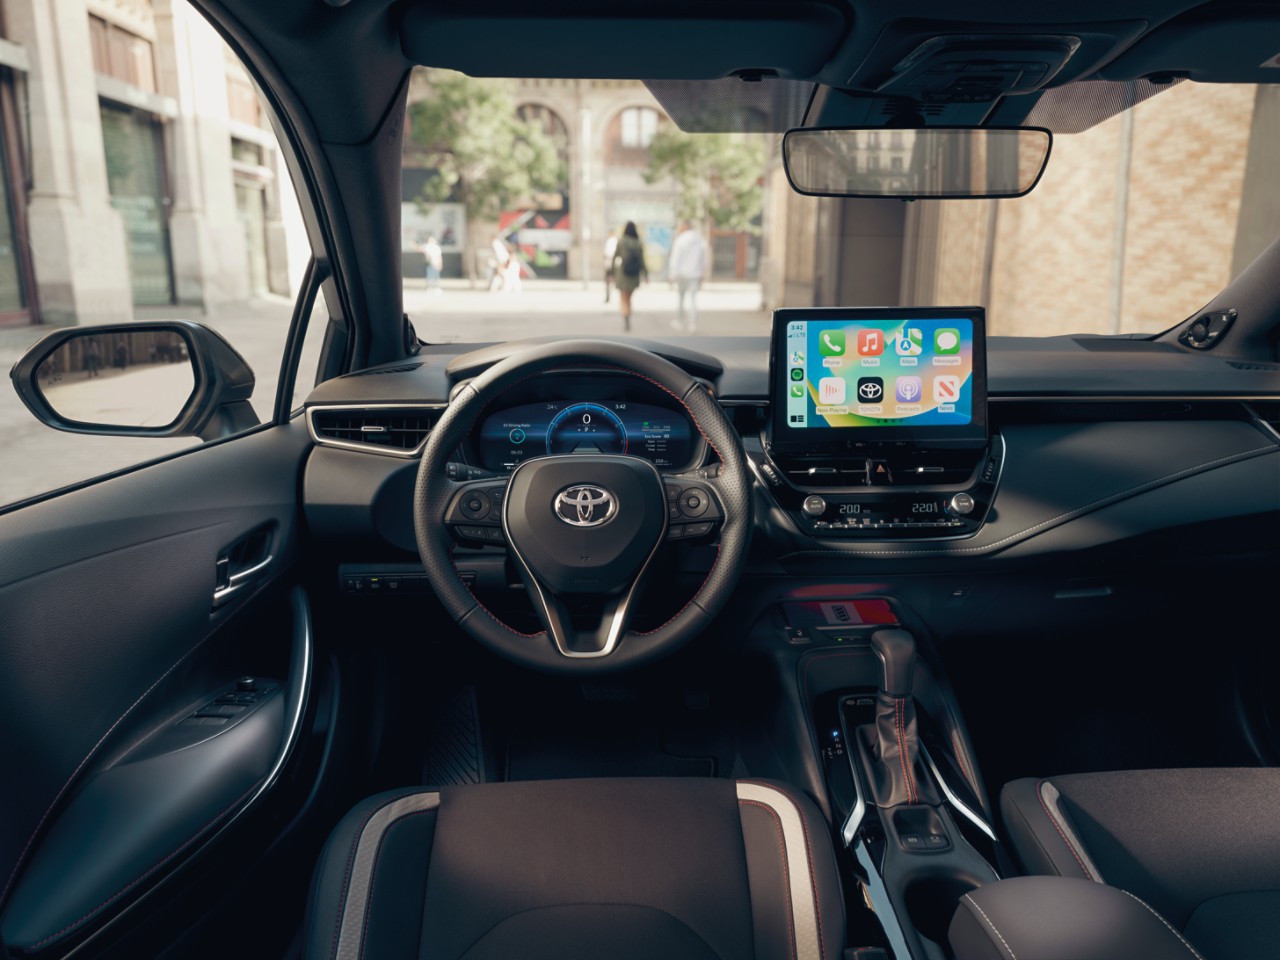 Toyota Corolla Touring Sports interior